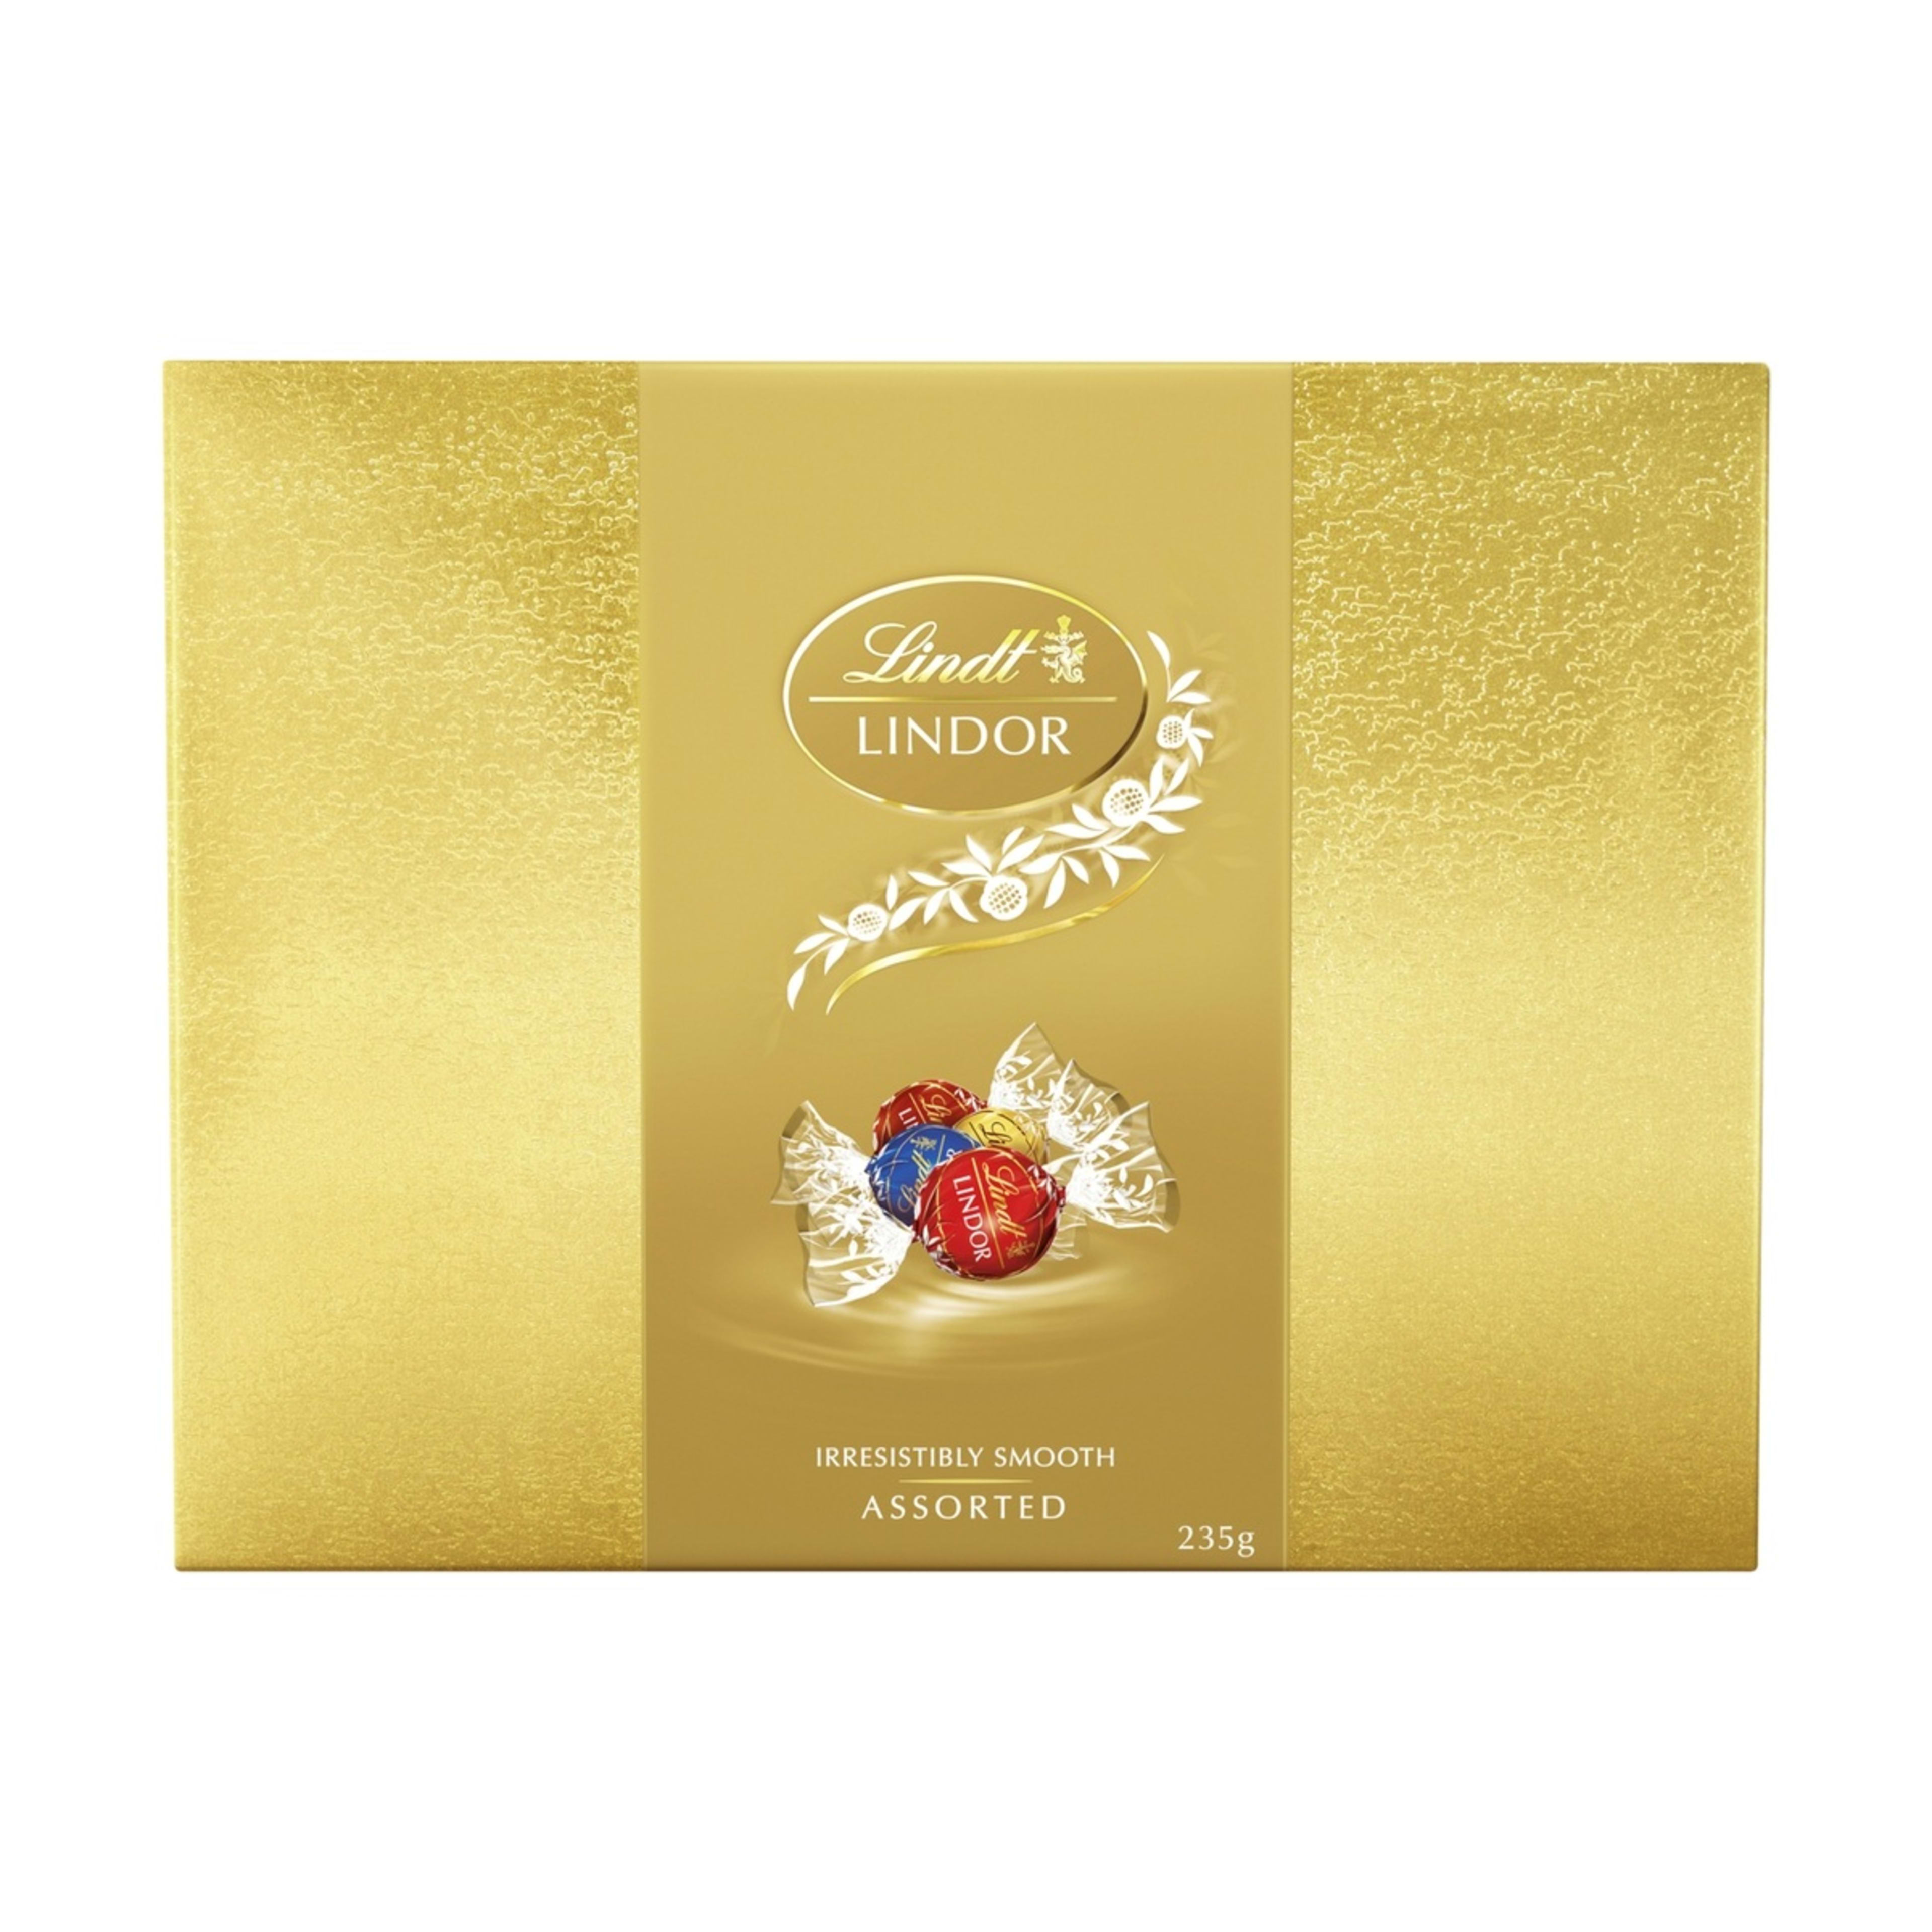 Lindt LINDOR Assorted Chocolate Gift Box 235g - Kmart